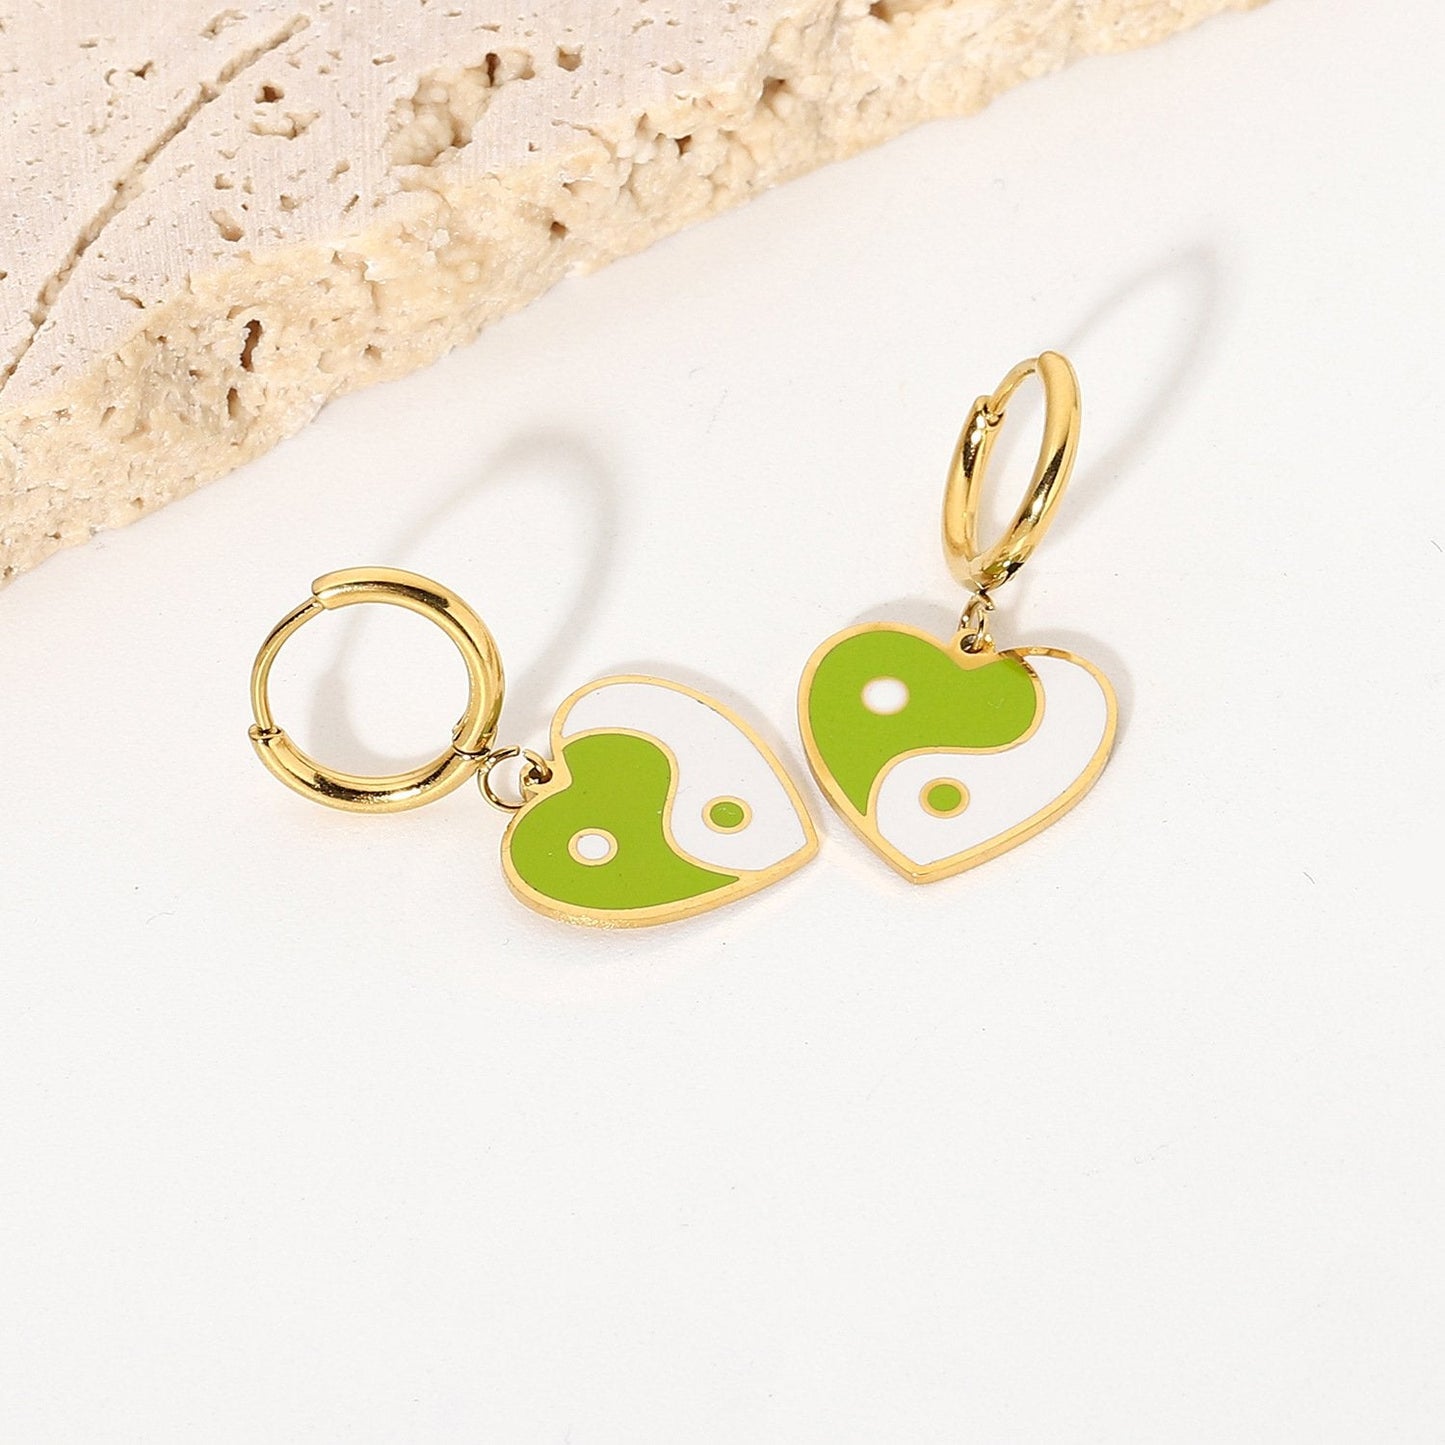 Yin yang heart earrings